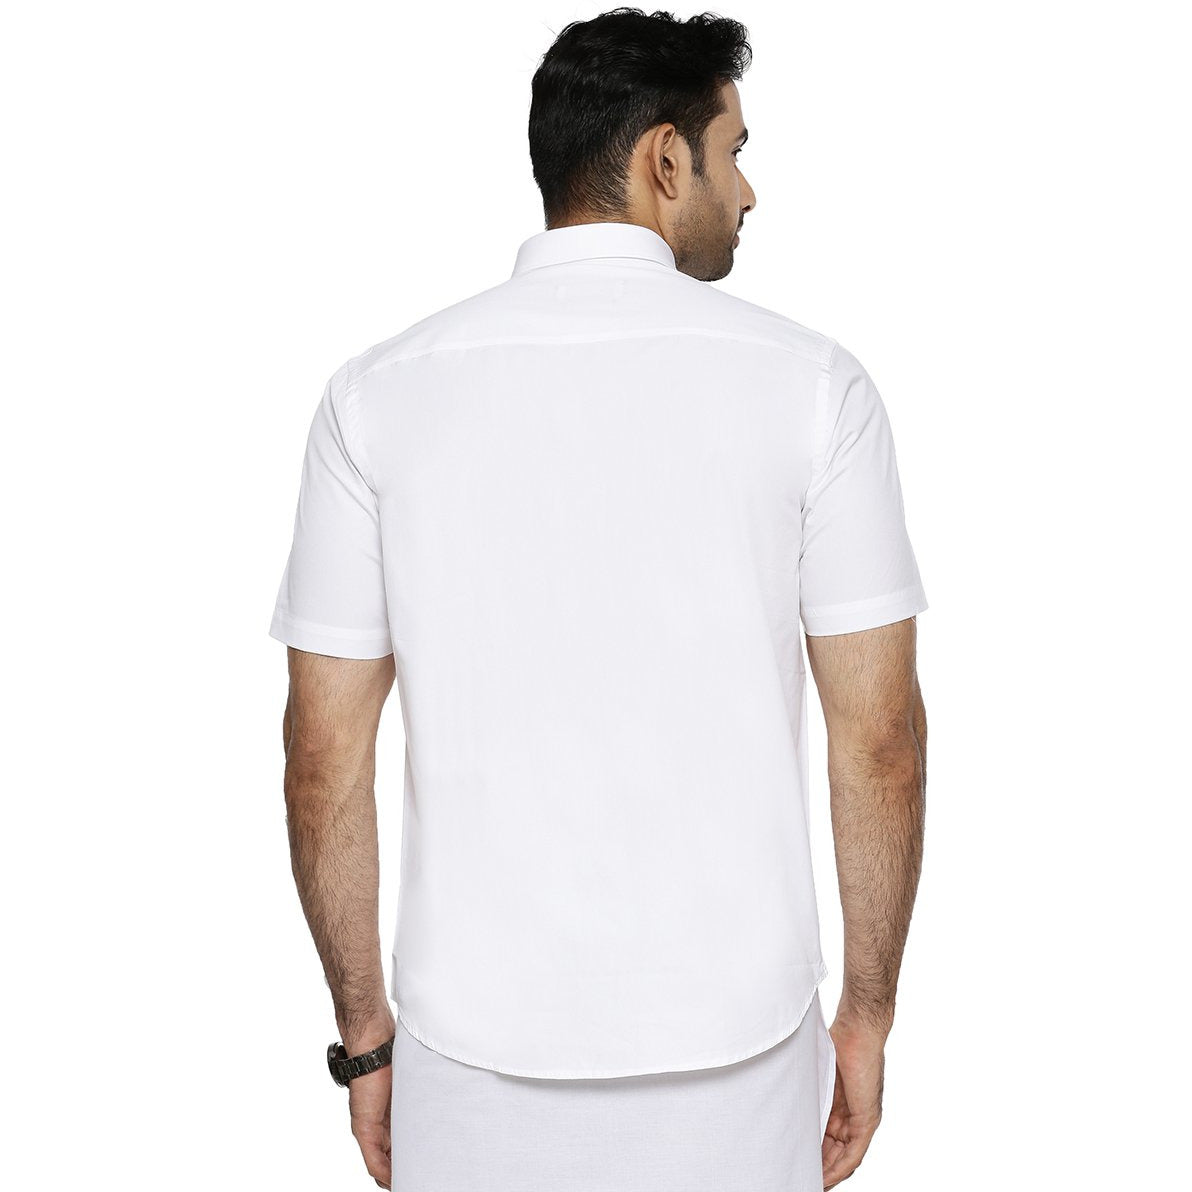 Mens Cotton White Shirt Half Sleeves Plus Size Luxury Cotton-Back view